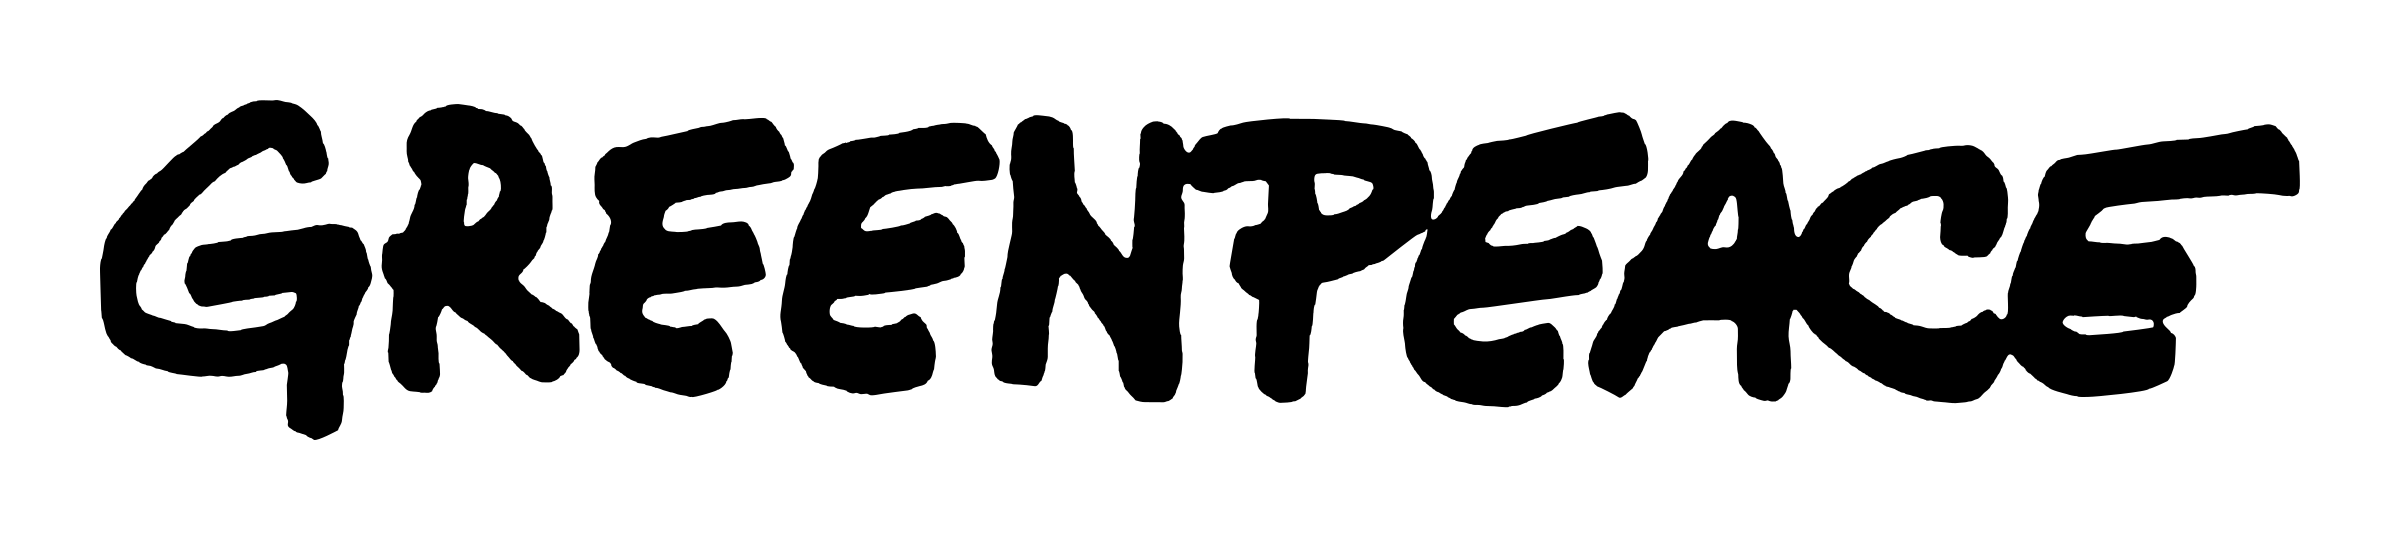 Greenpeace logo, black